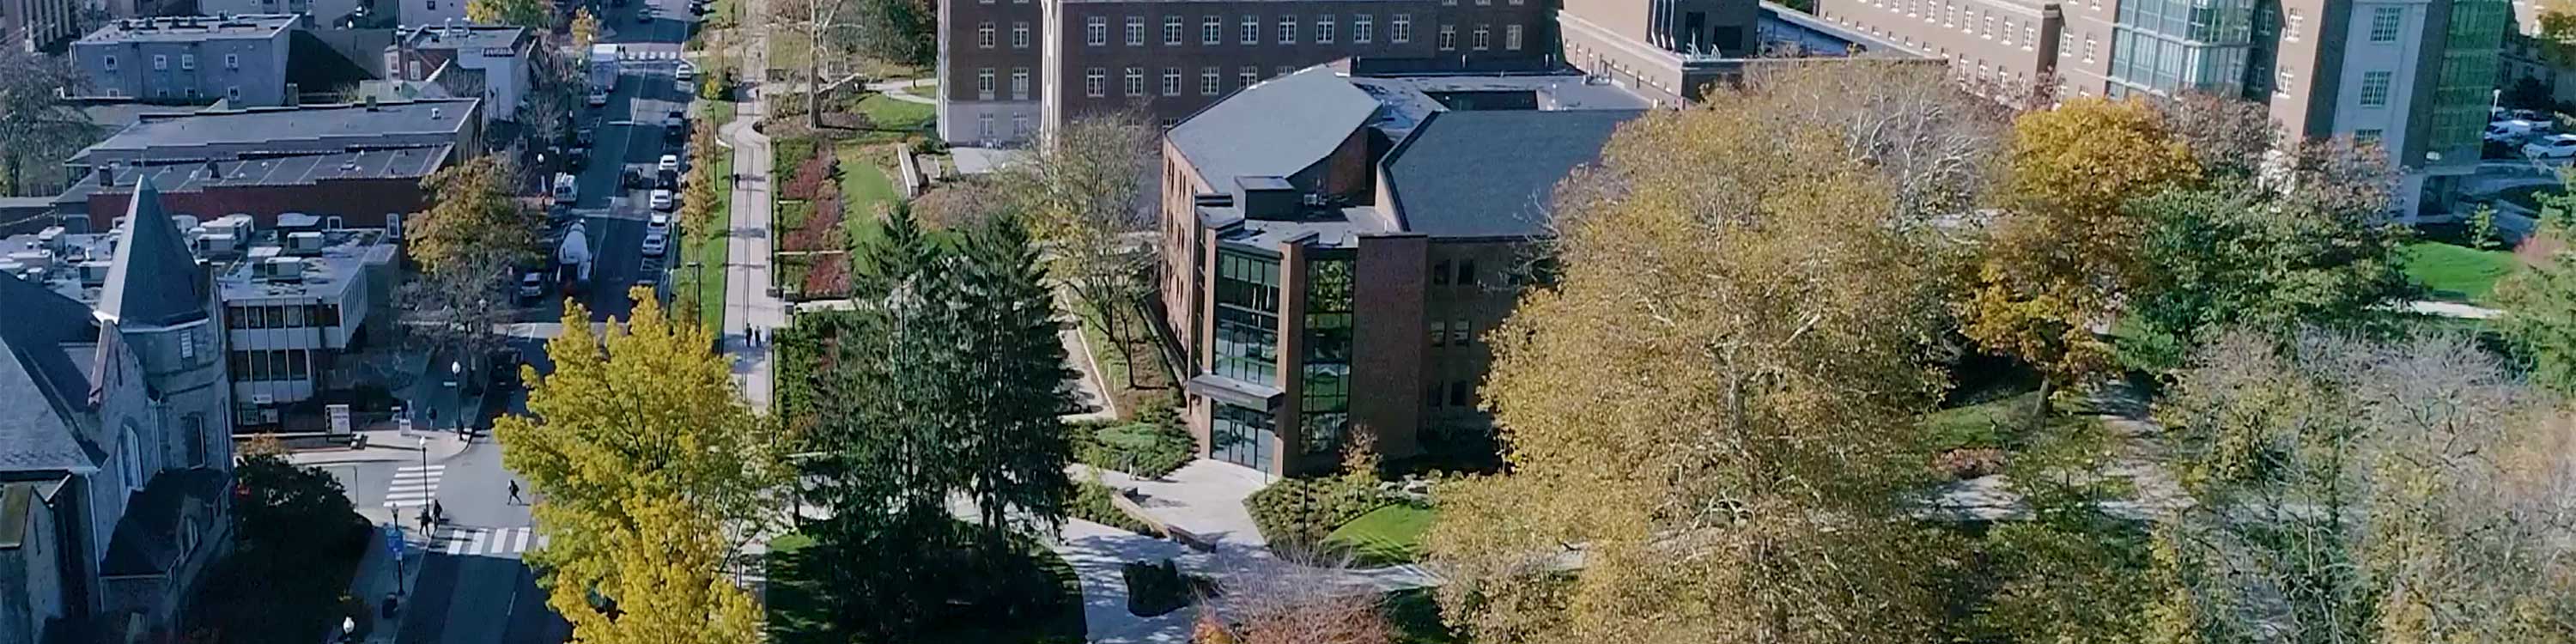 aerial view of Penn State Campus near Nursing Sciences Building